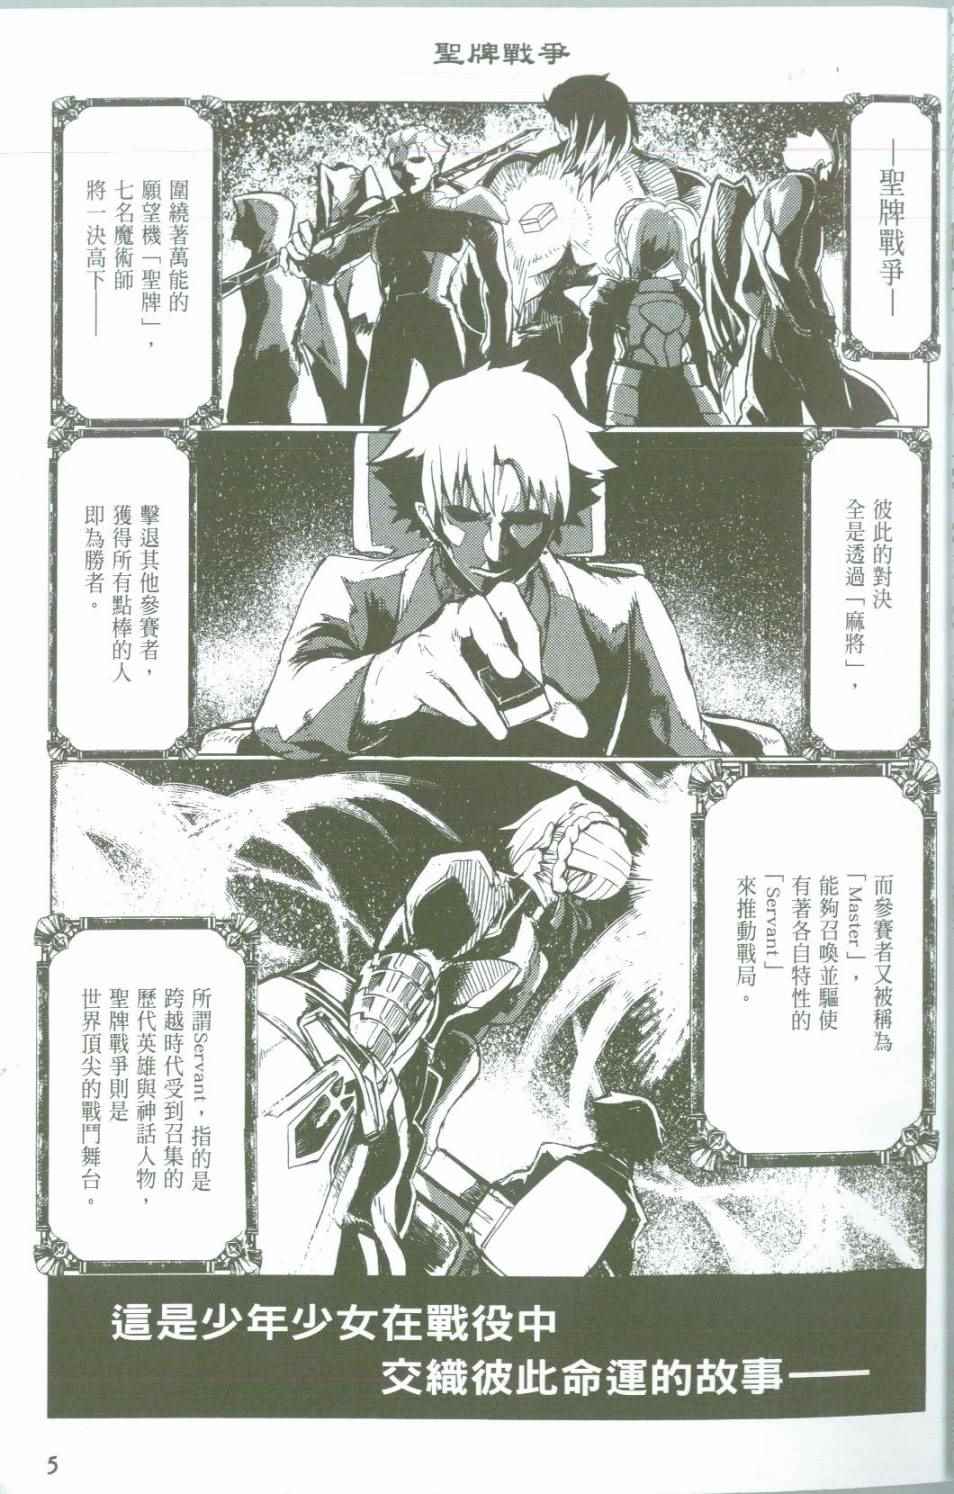 《Fate/mahjong night 圣牌战争》漫画 圣牌战争 序章